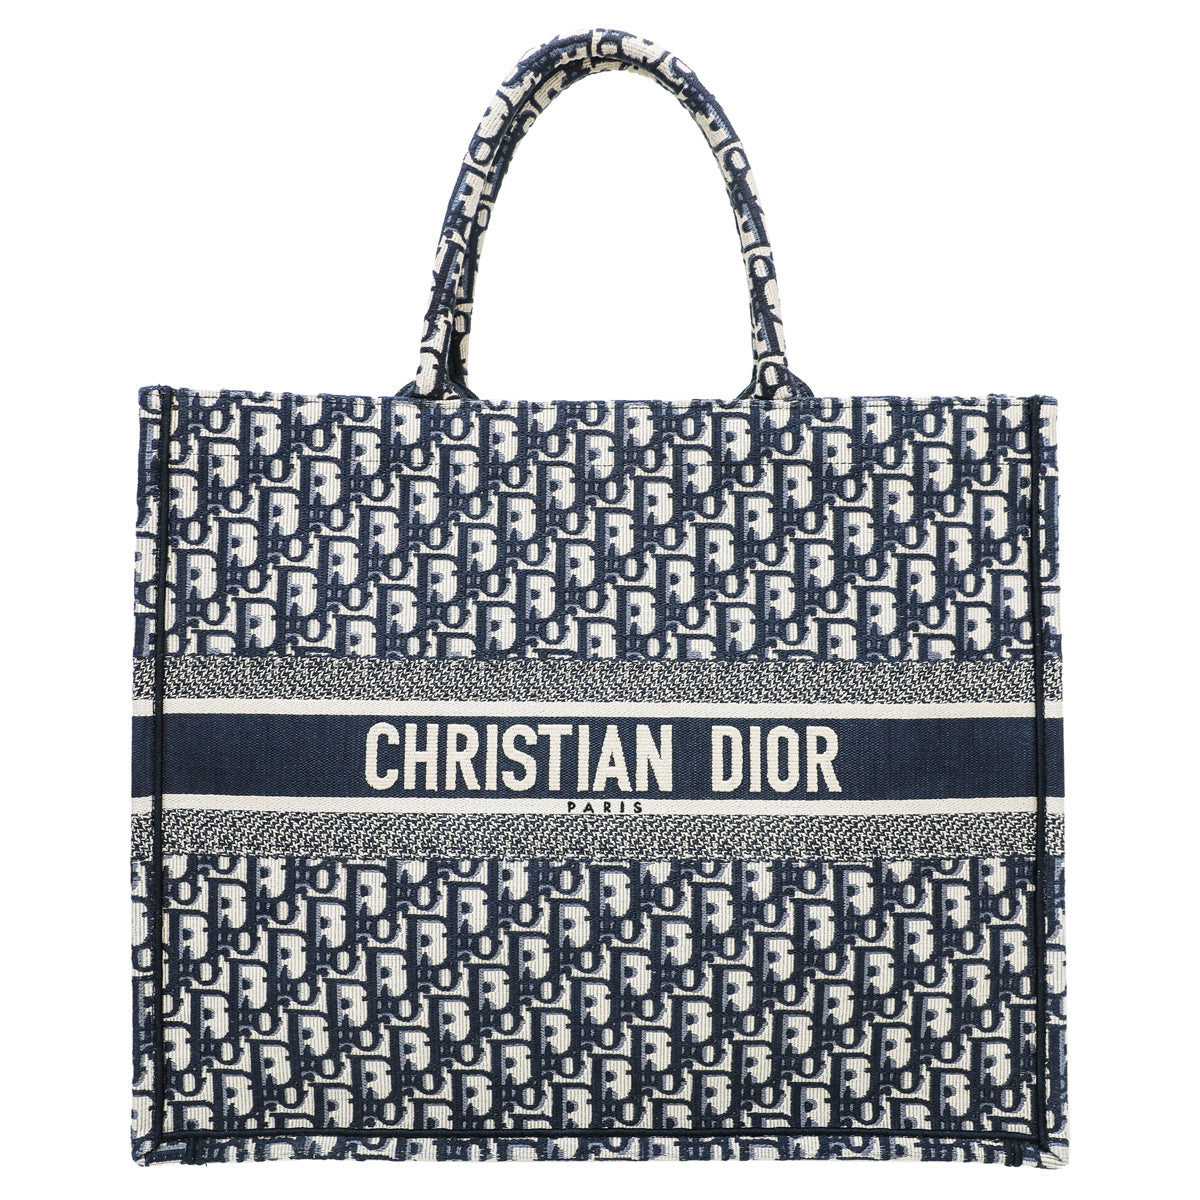 Christian Dior oblique book tote large bag navy blue